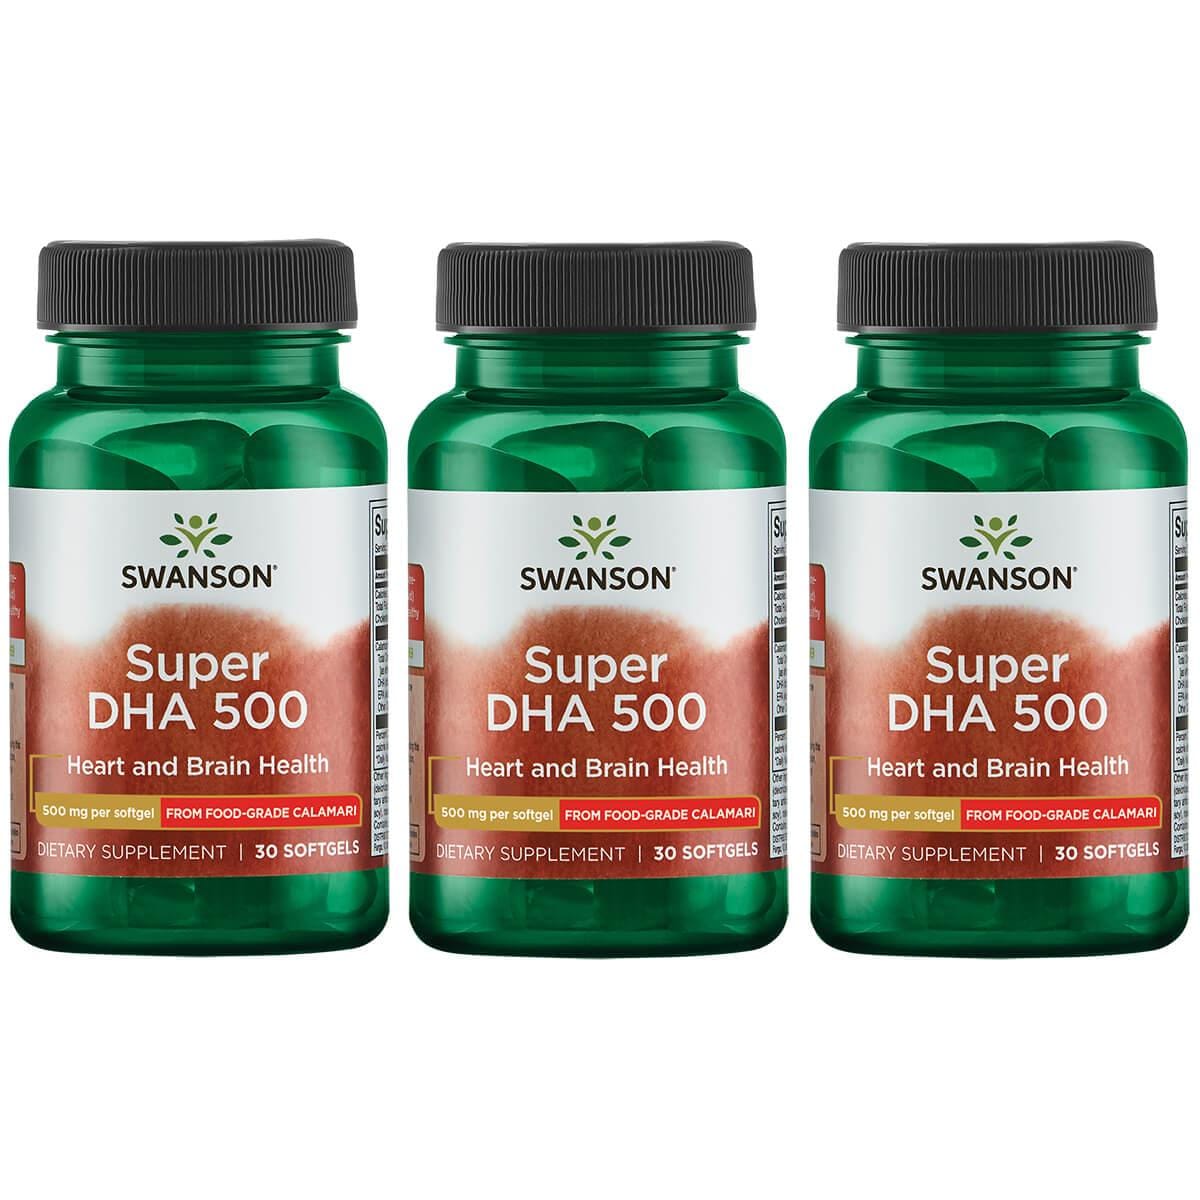 Swanson EFAs Super Dha 500 from Food-Grade Calamari 3 Pack Supplement Vitamin 500 mg 30 Soft Gels